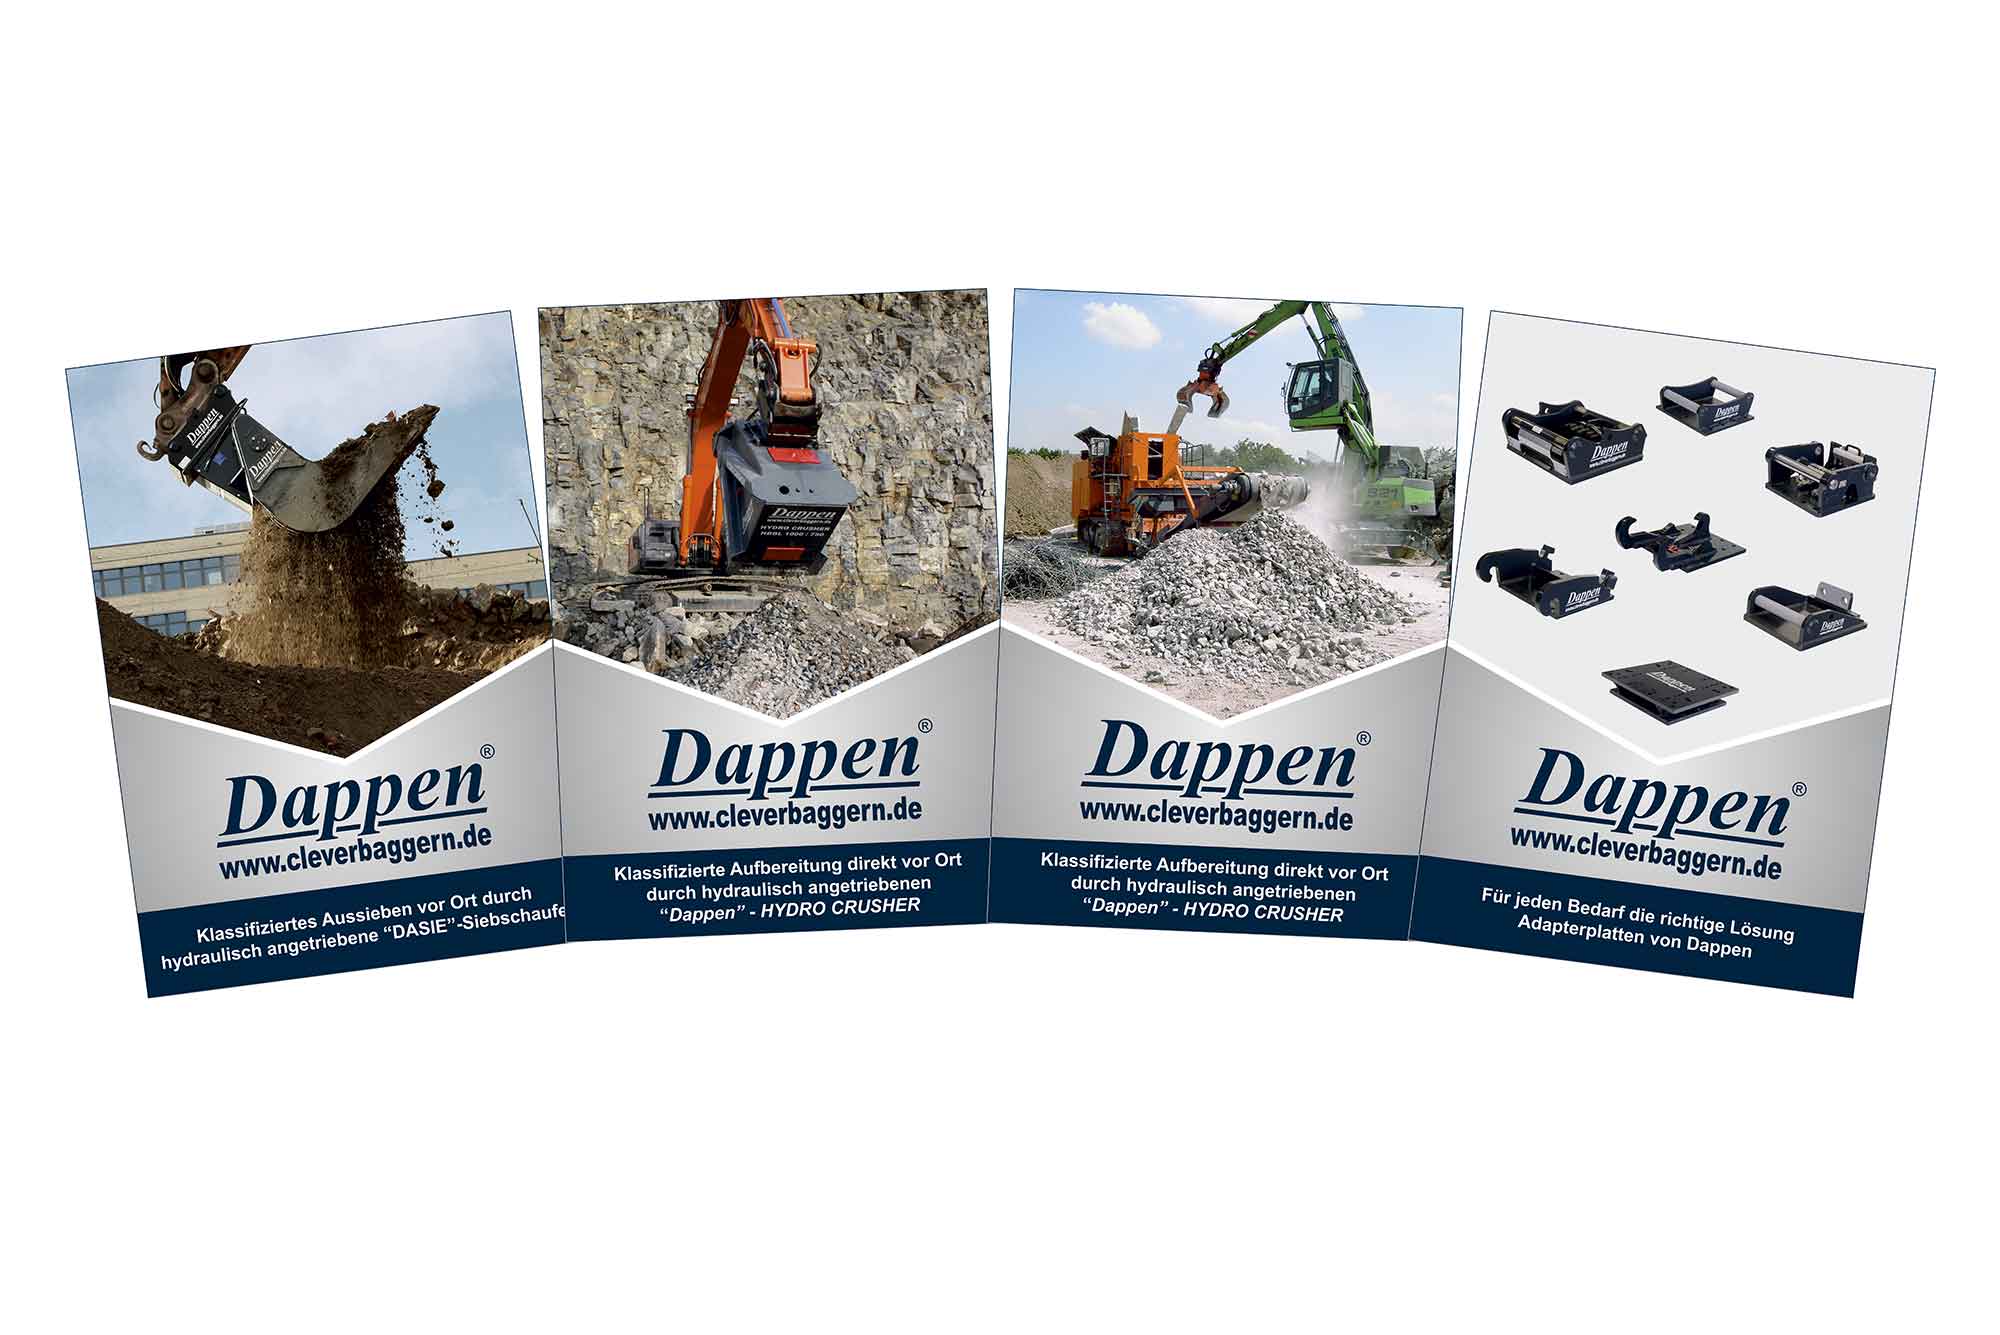 Dappen Werkzeug- und Maschinenbau | Information material to download | Pictures to view for information material to download with pictures of Dappen products